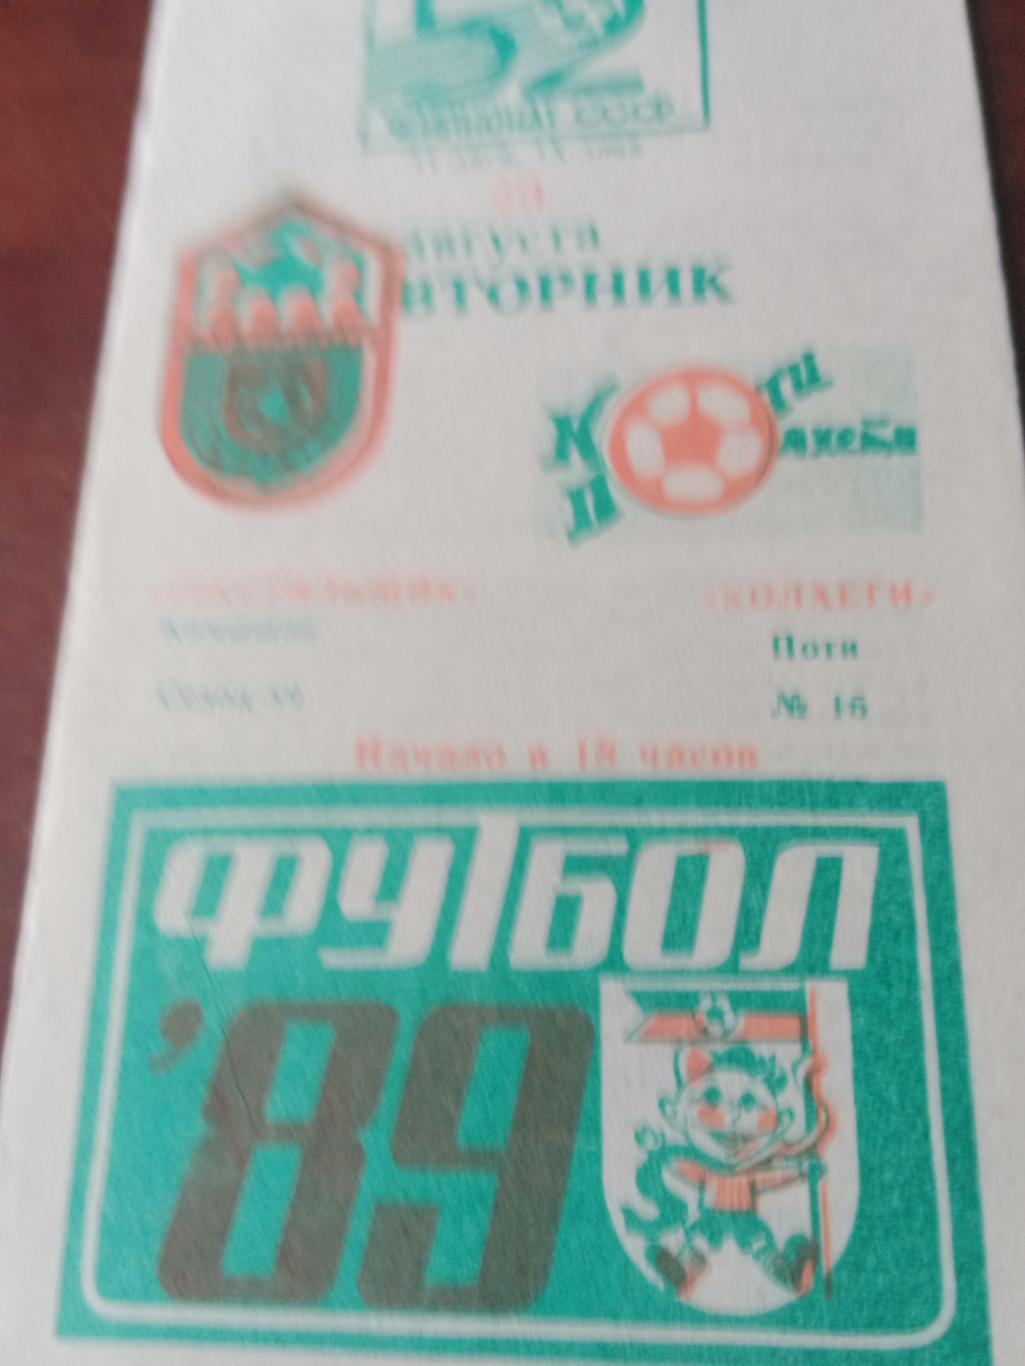 АКЦИЯ! Текстильщик Камышин - Колхети Поти. 29 августа 1989 год